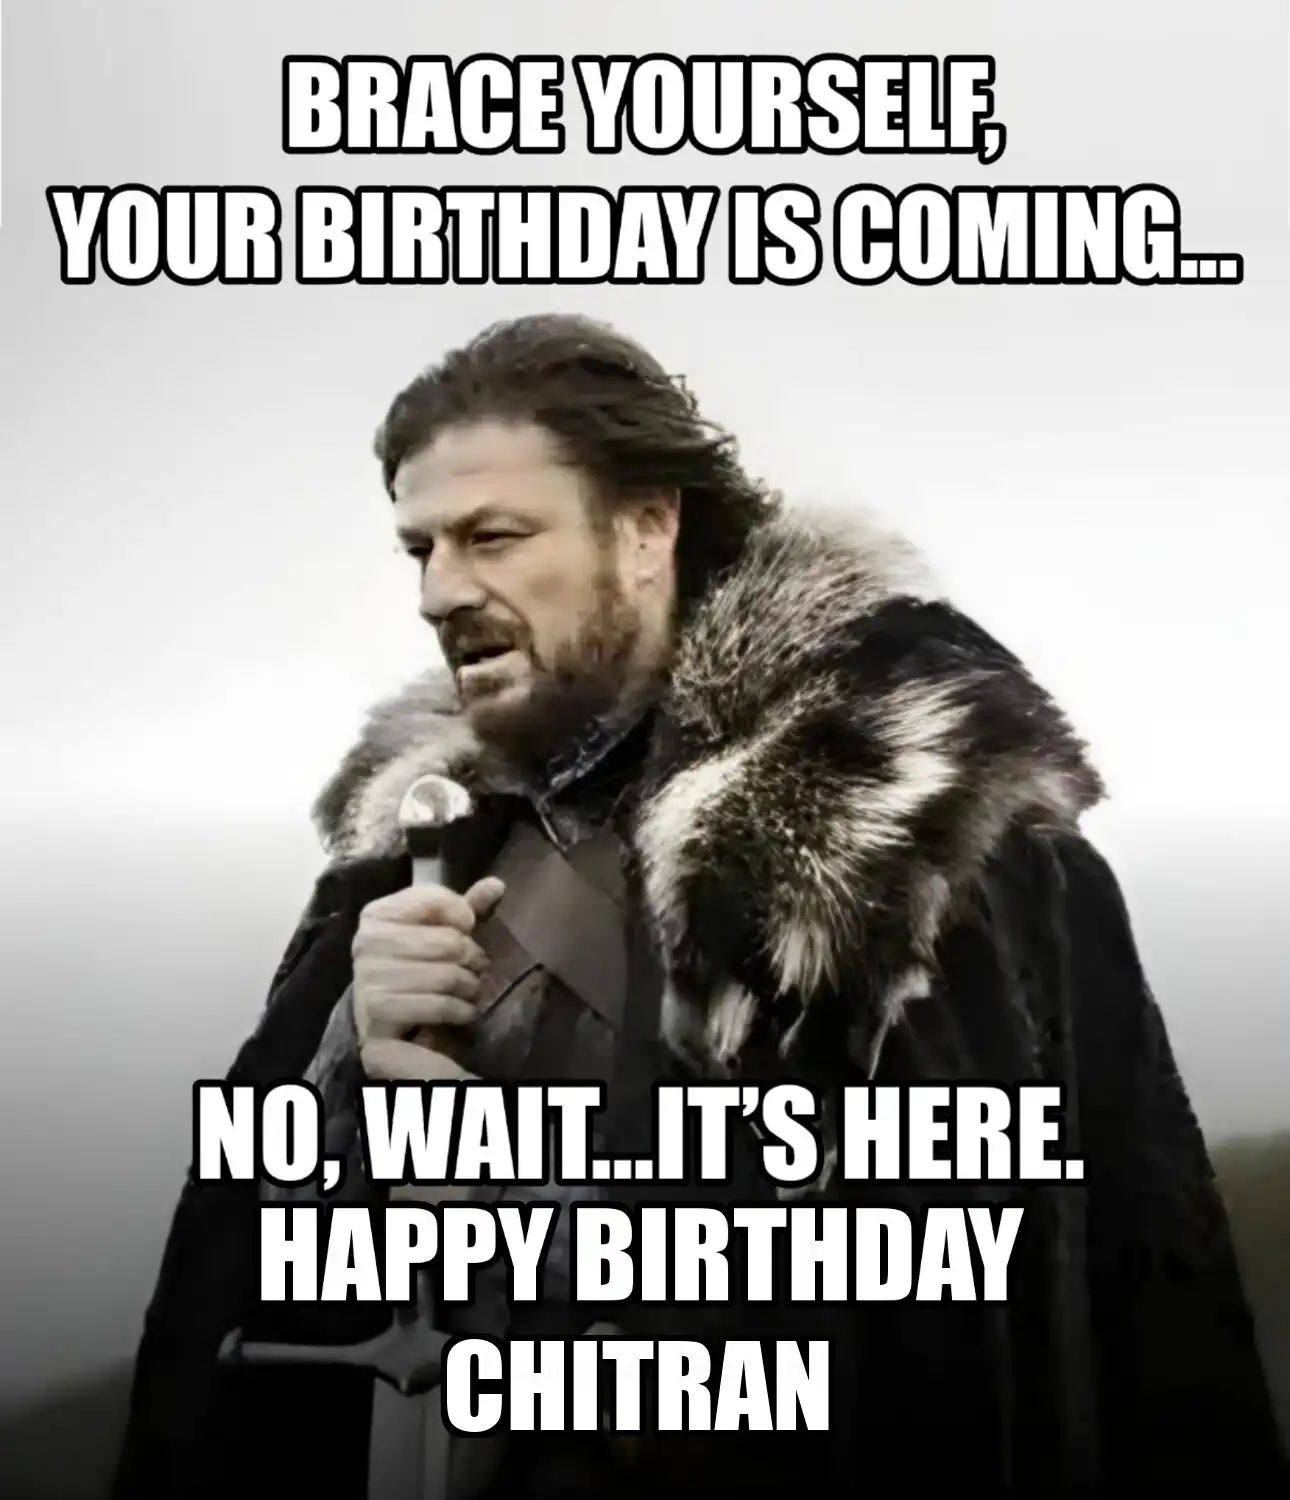 Happy Birthday Chitran Brace Yourself Your Birthday Is Coming Meme